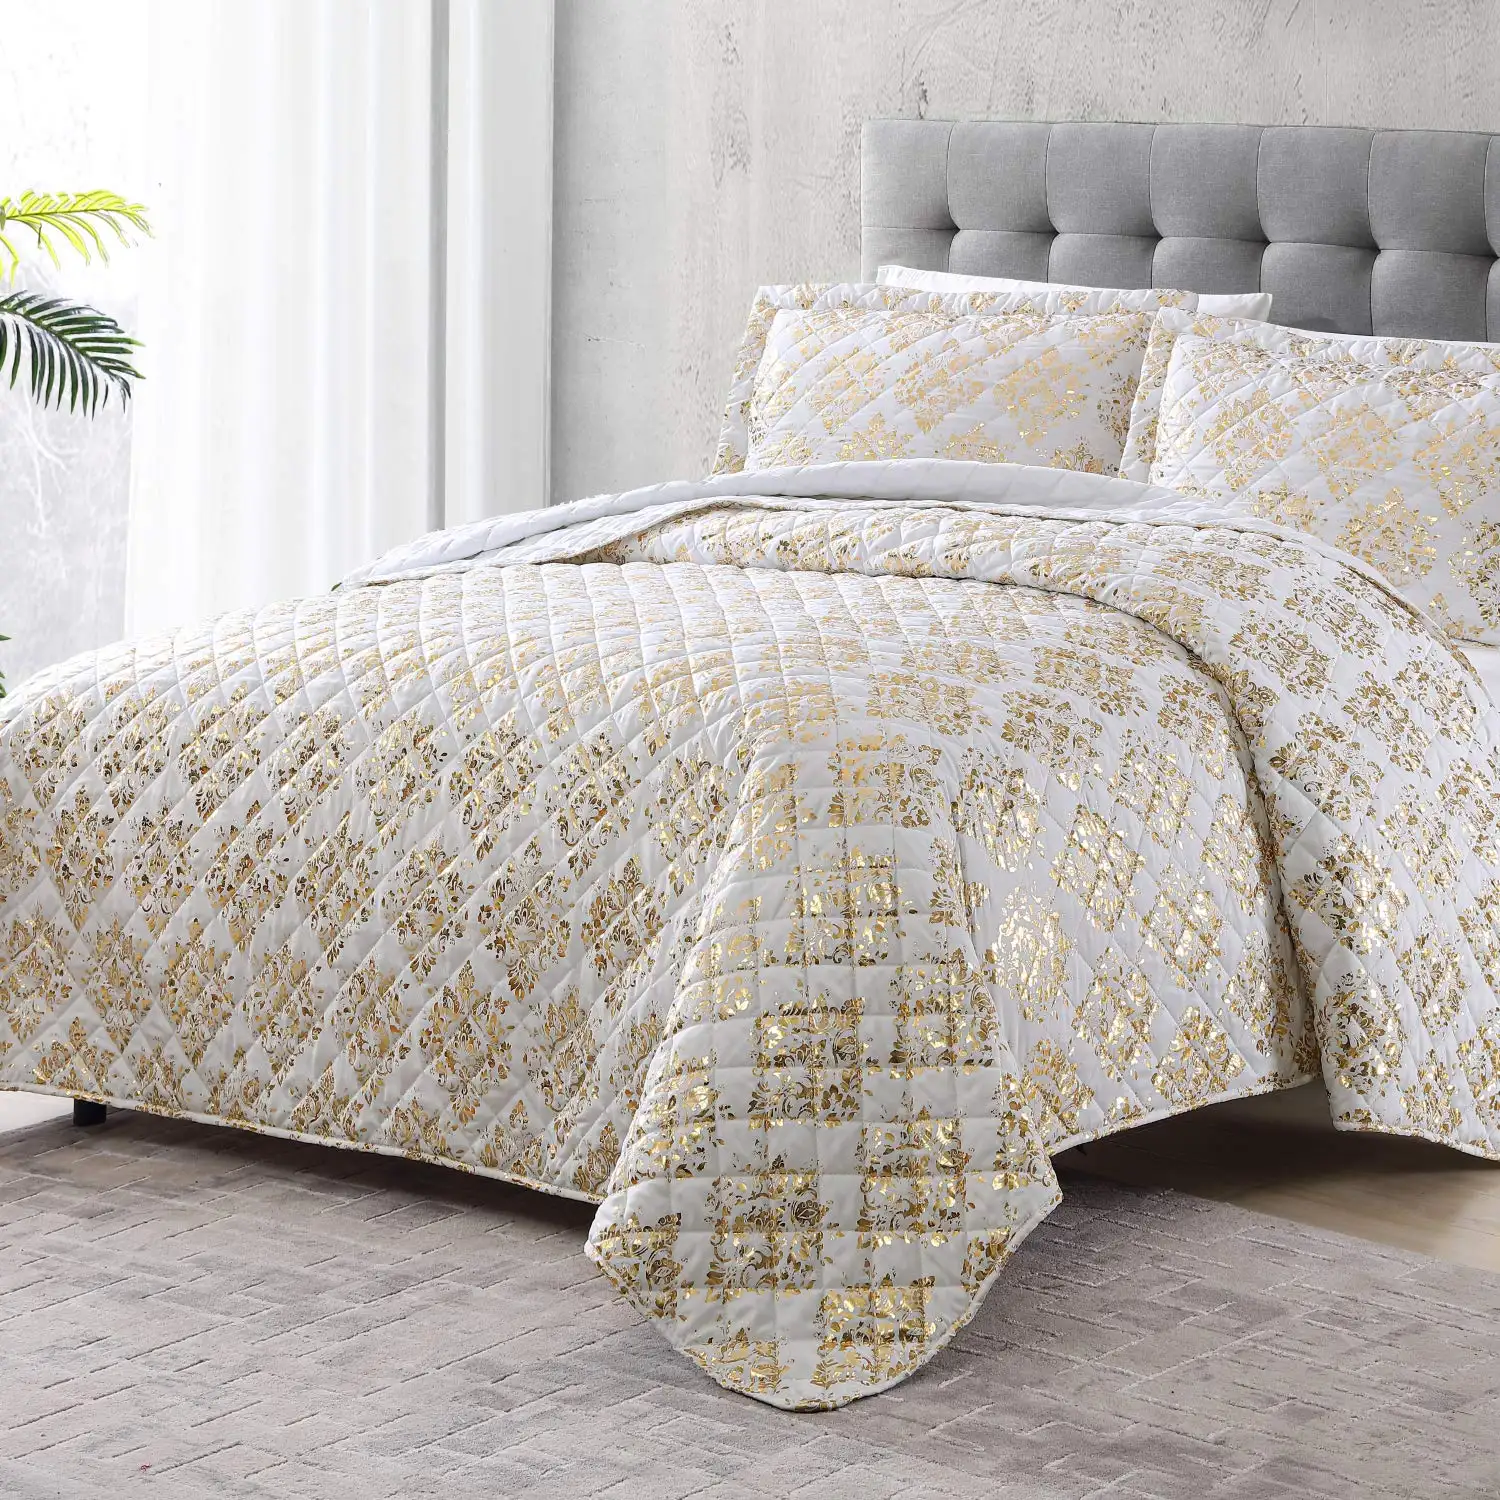 Yuchun BSCI Factory Bed Quilt Set With Pillow Cases Bedding Sheet Soft Queen Size Duvet Cover Set